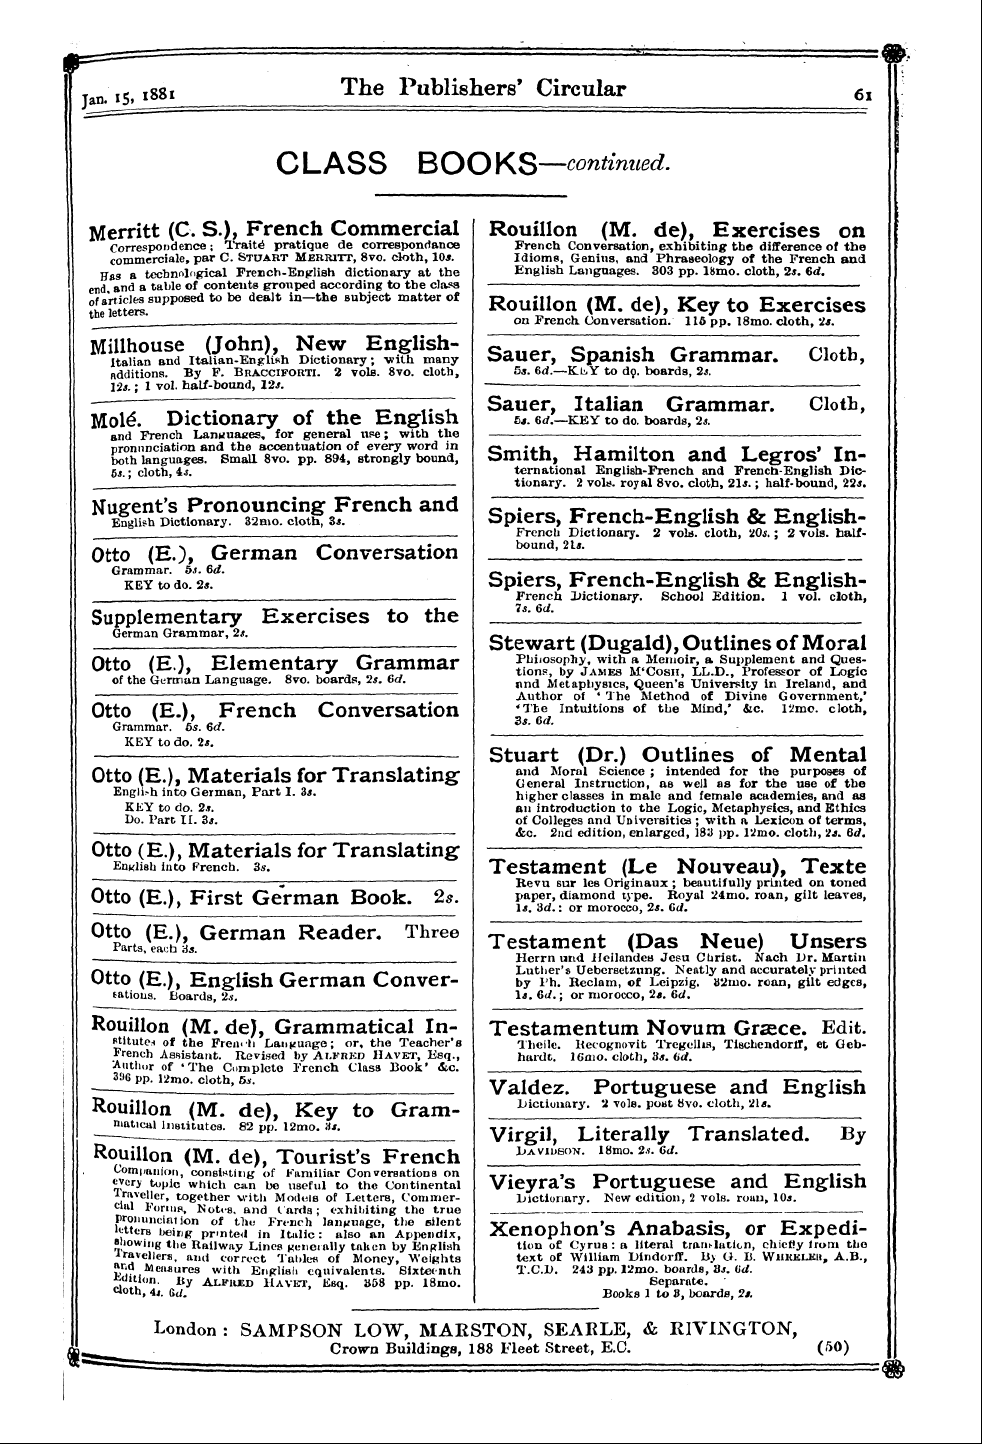 Publishers’ Circular (1880-1890): jS F Y, 1st edition: 61